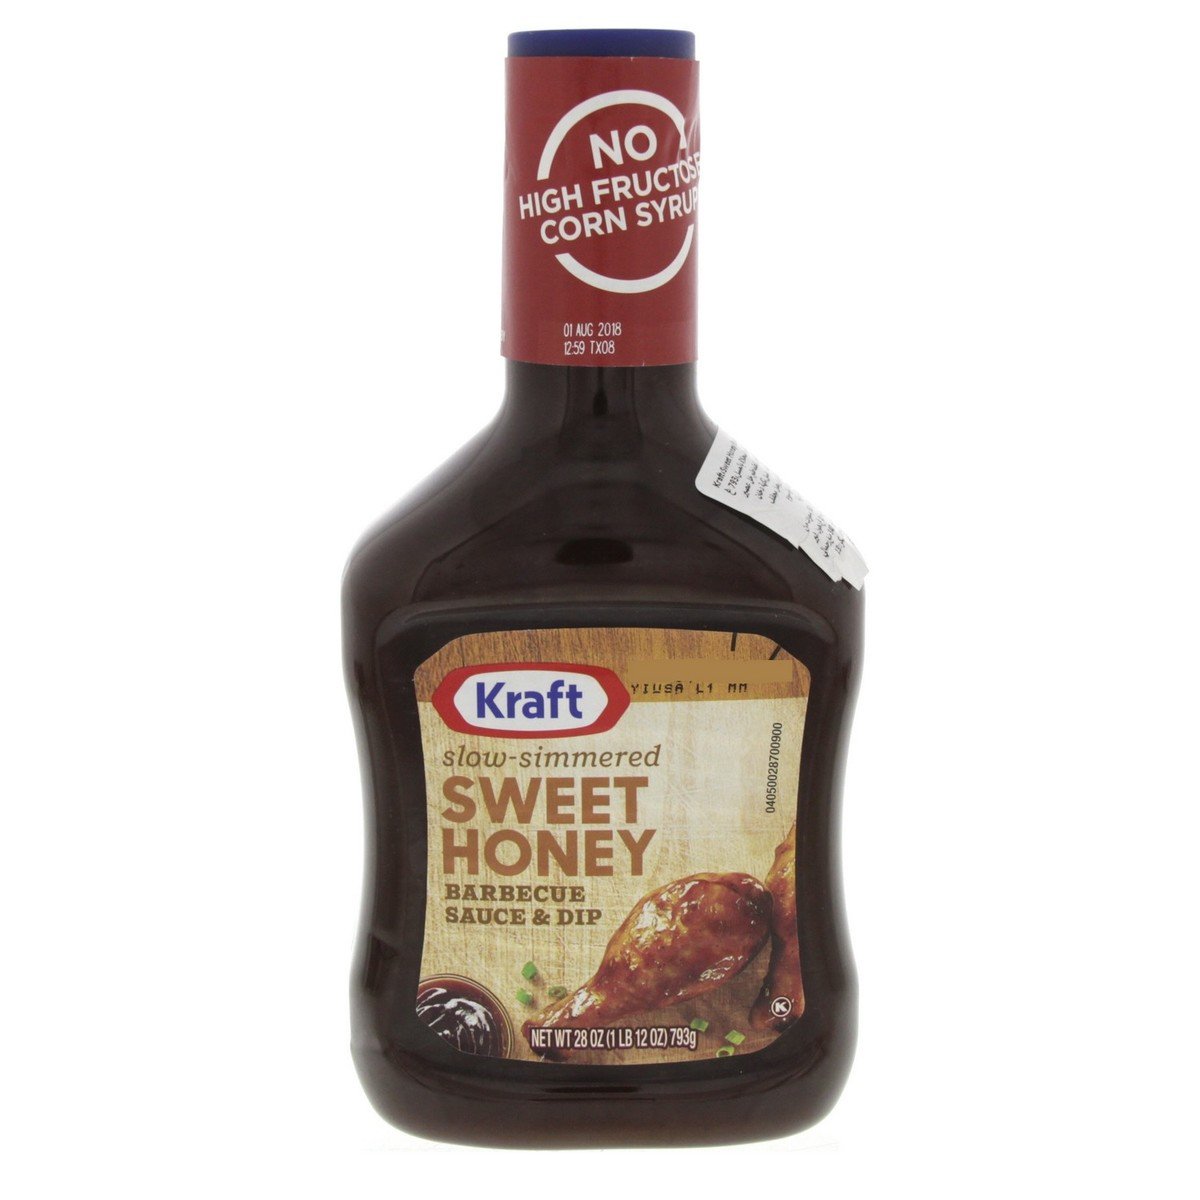 Kraft Sweet Honey Barbecue Sauce & Dip 793 g